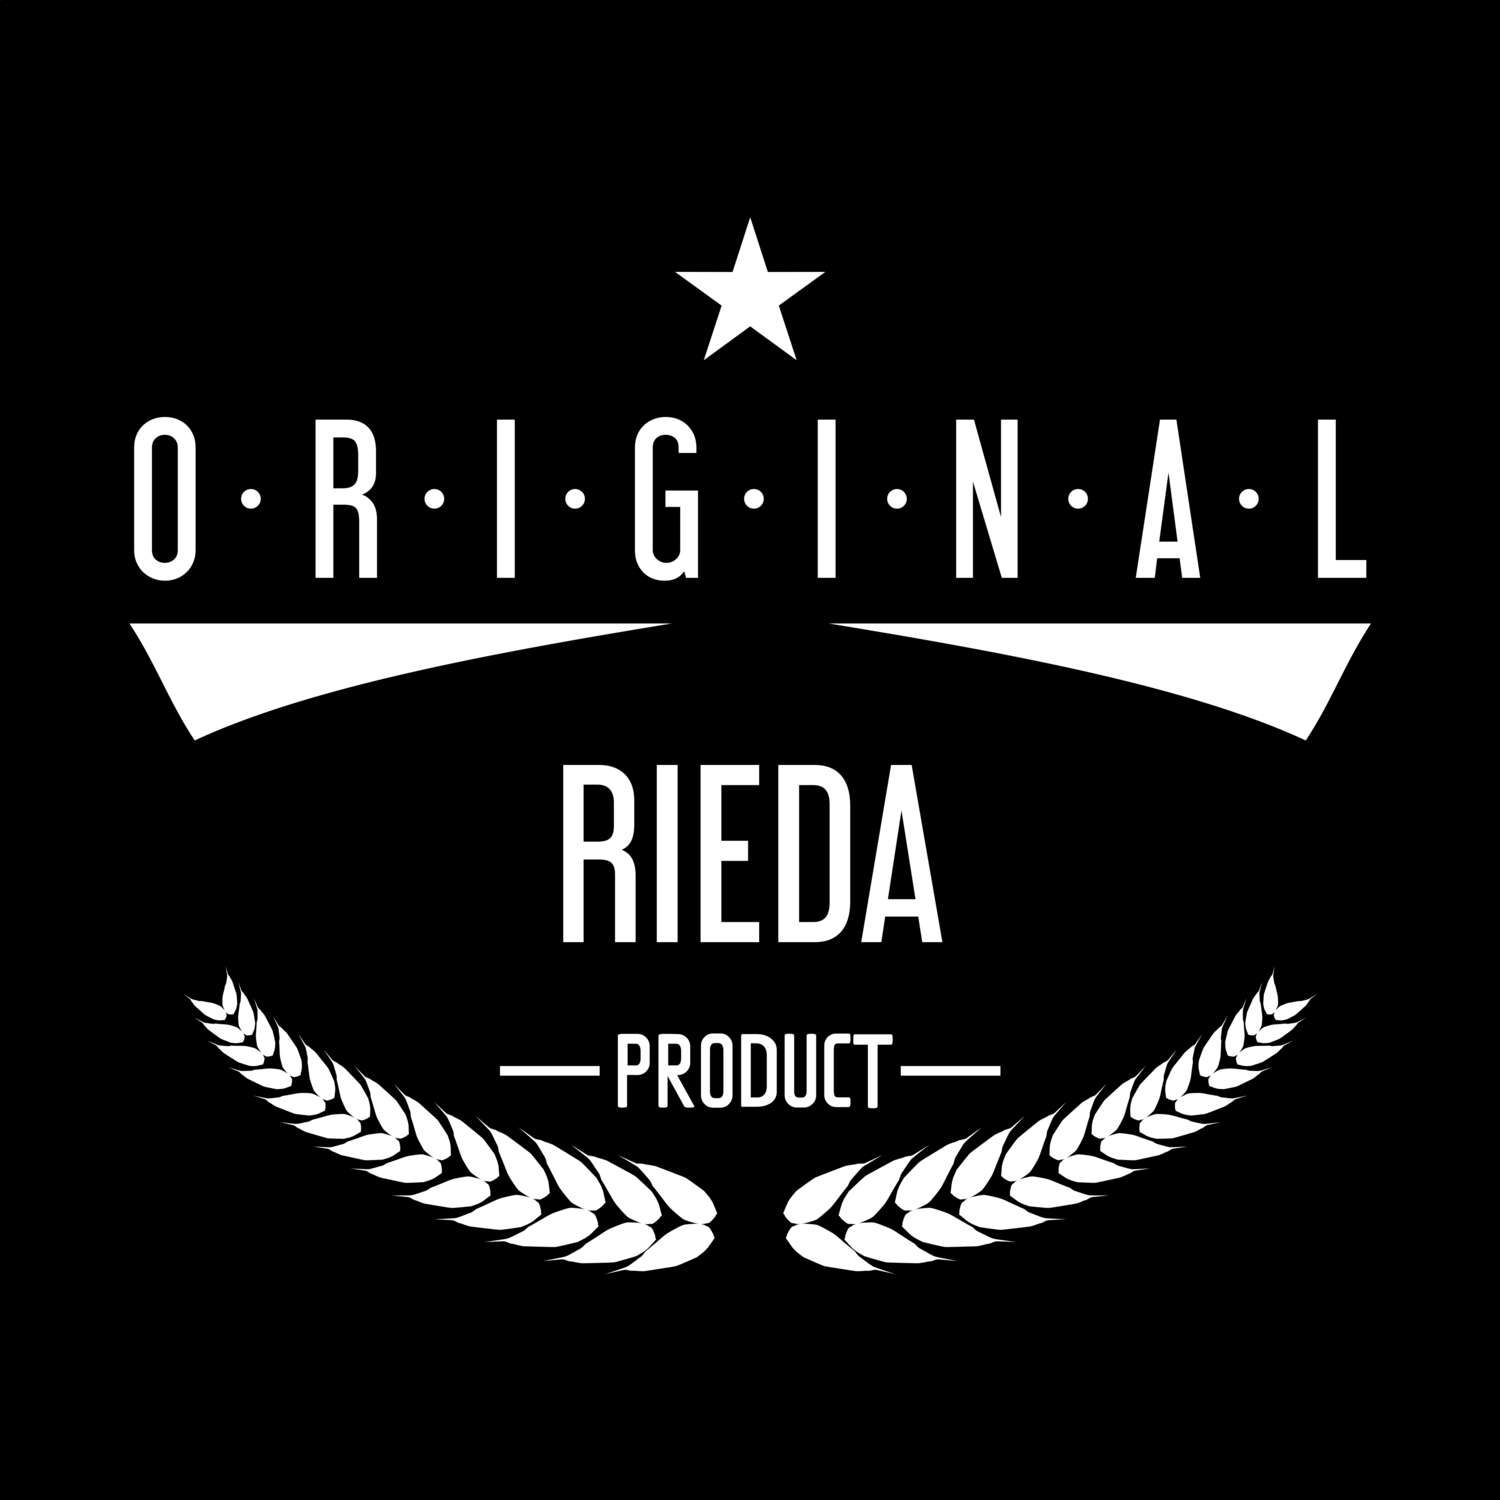 Rieda T-Shirt »Original Product«